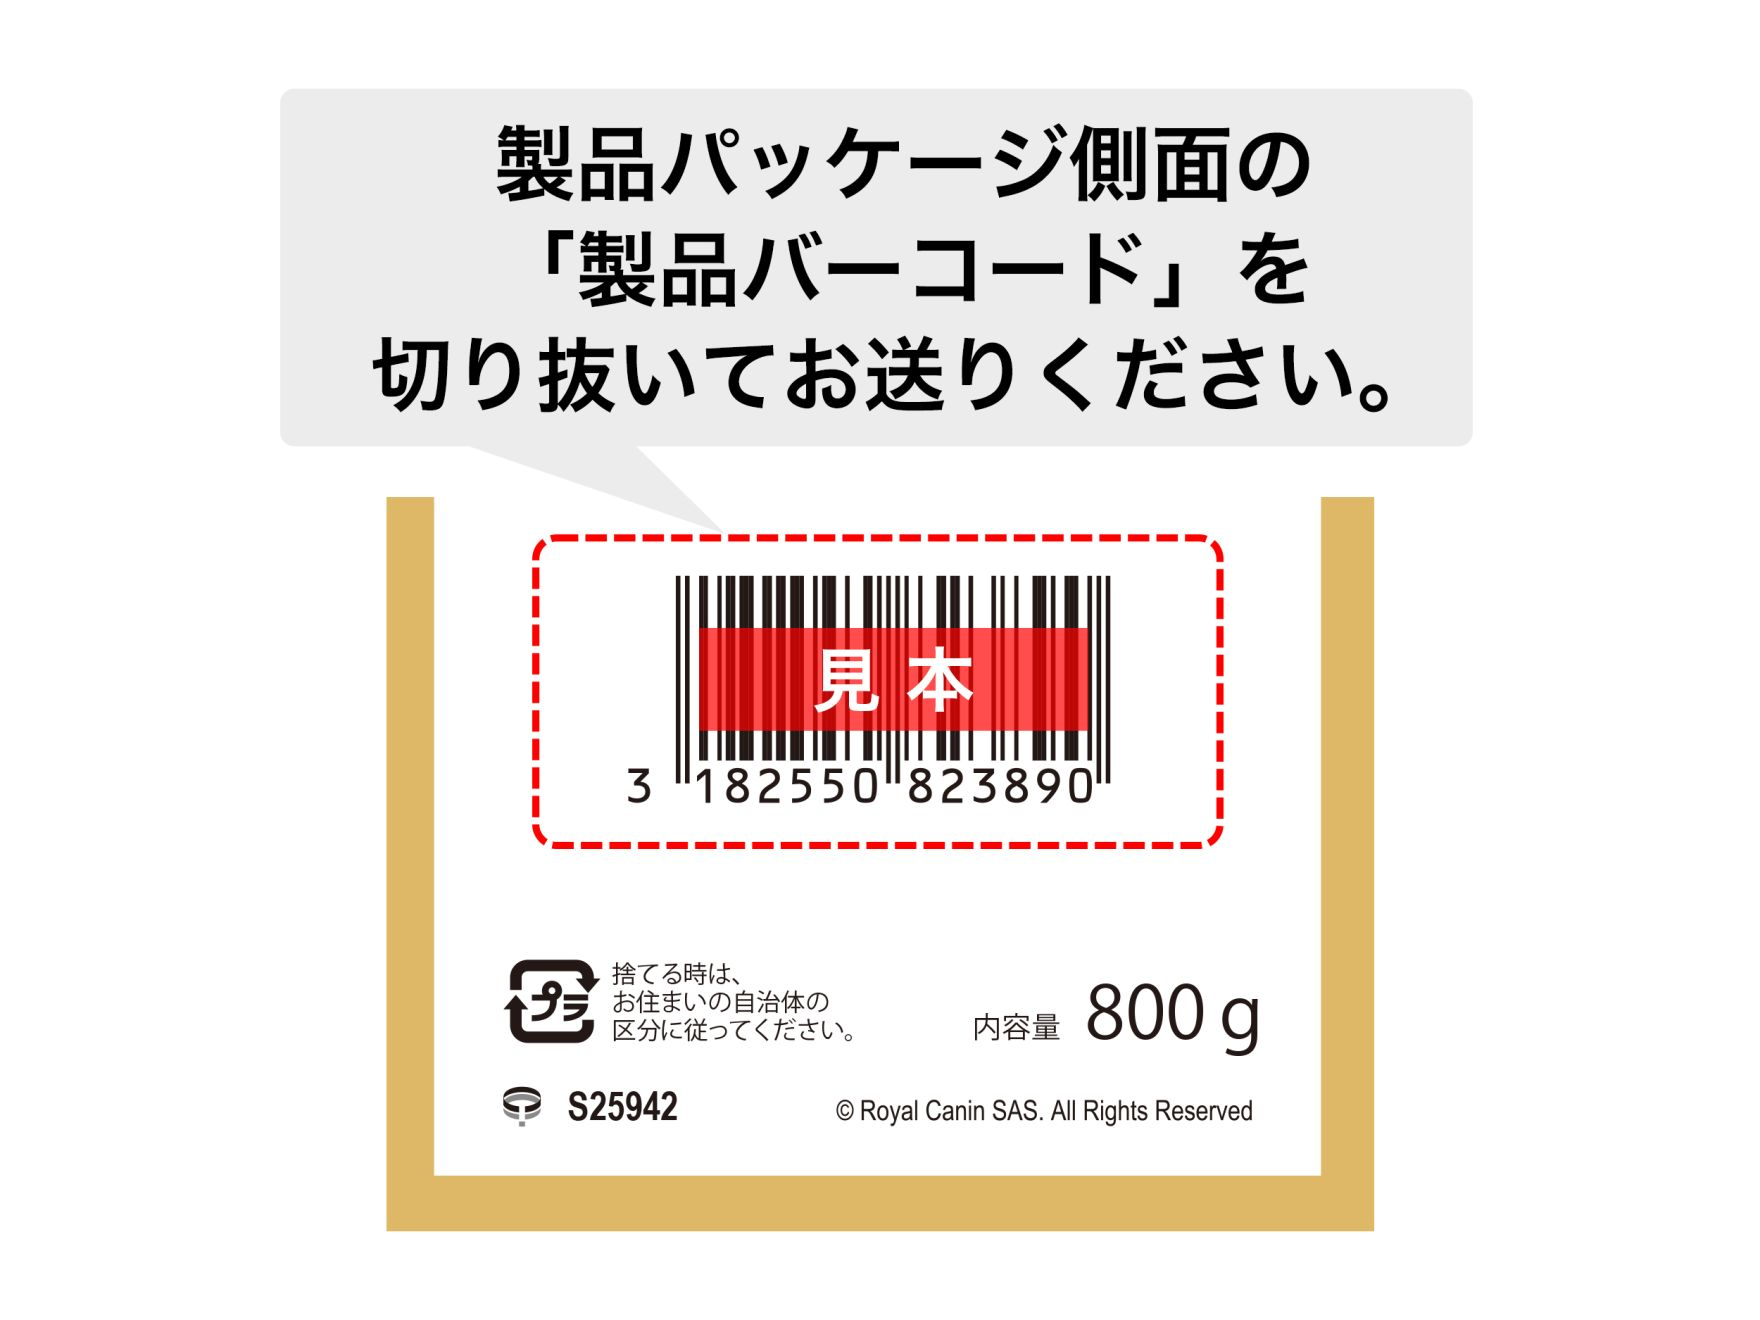 SPT guaranteed program application barcode